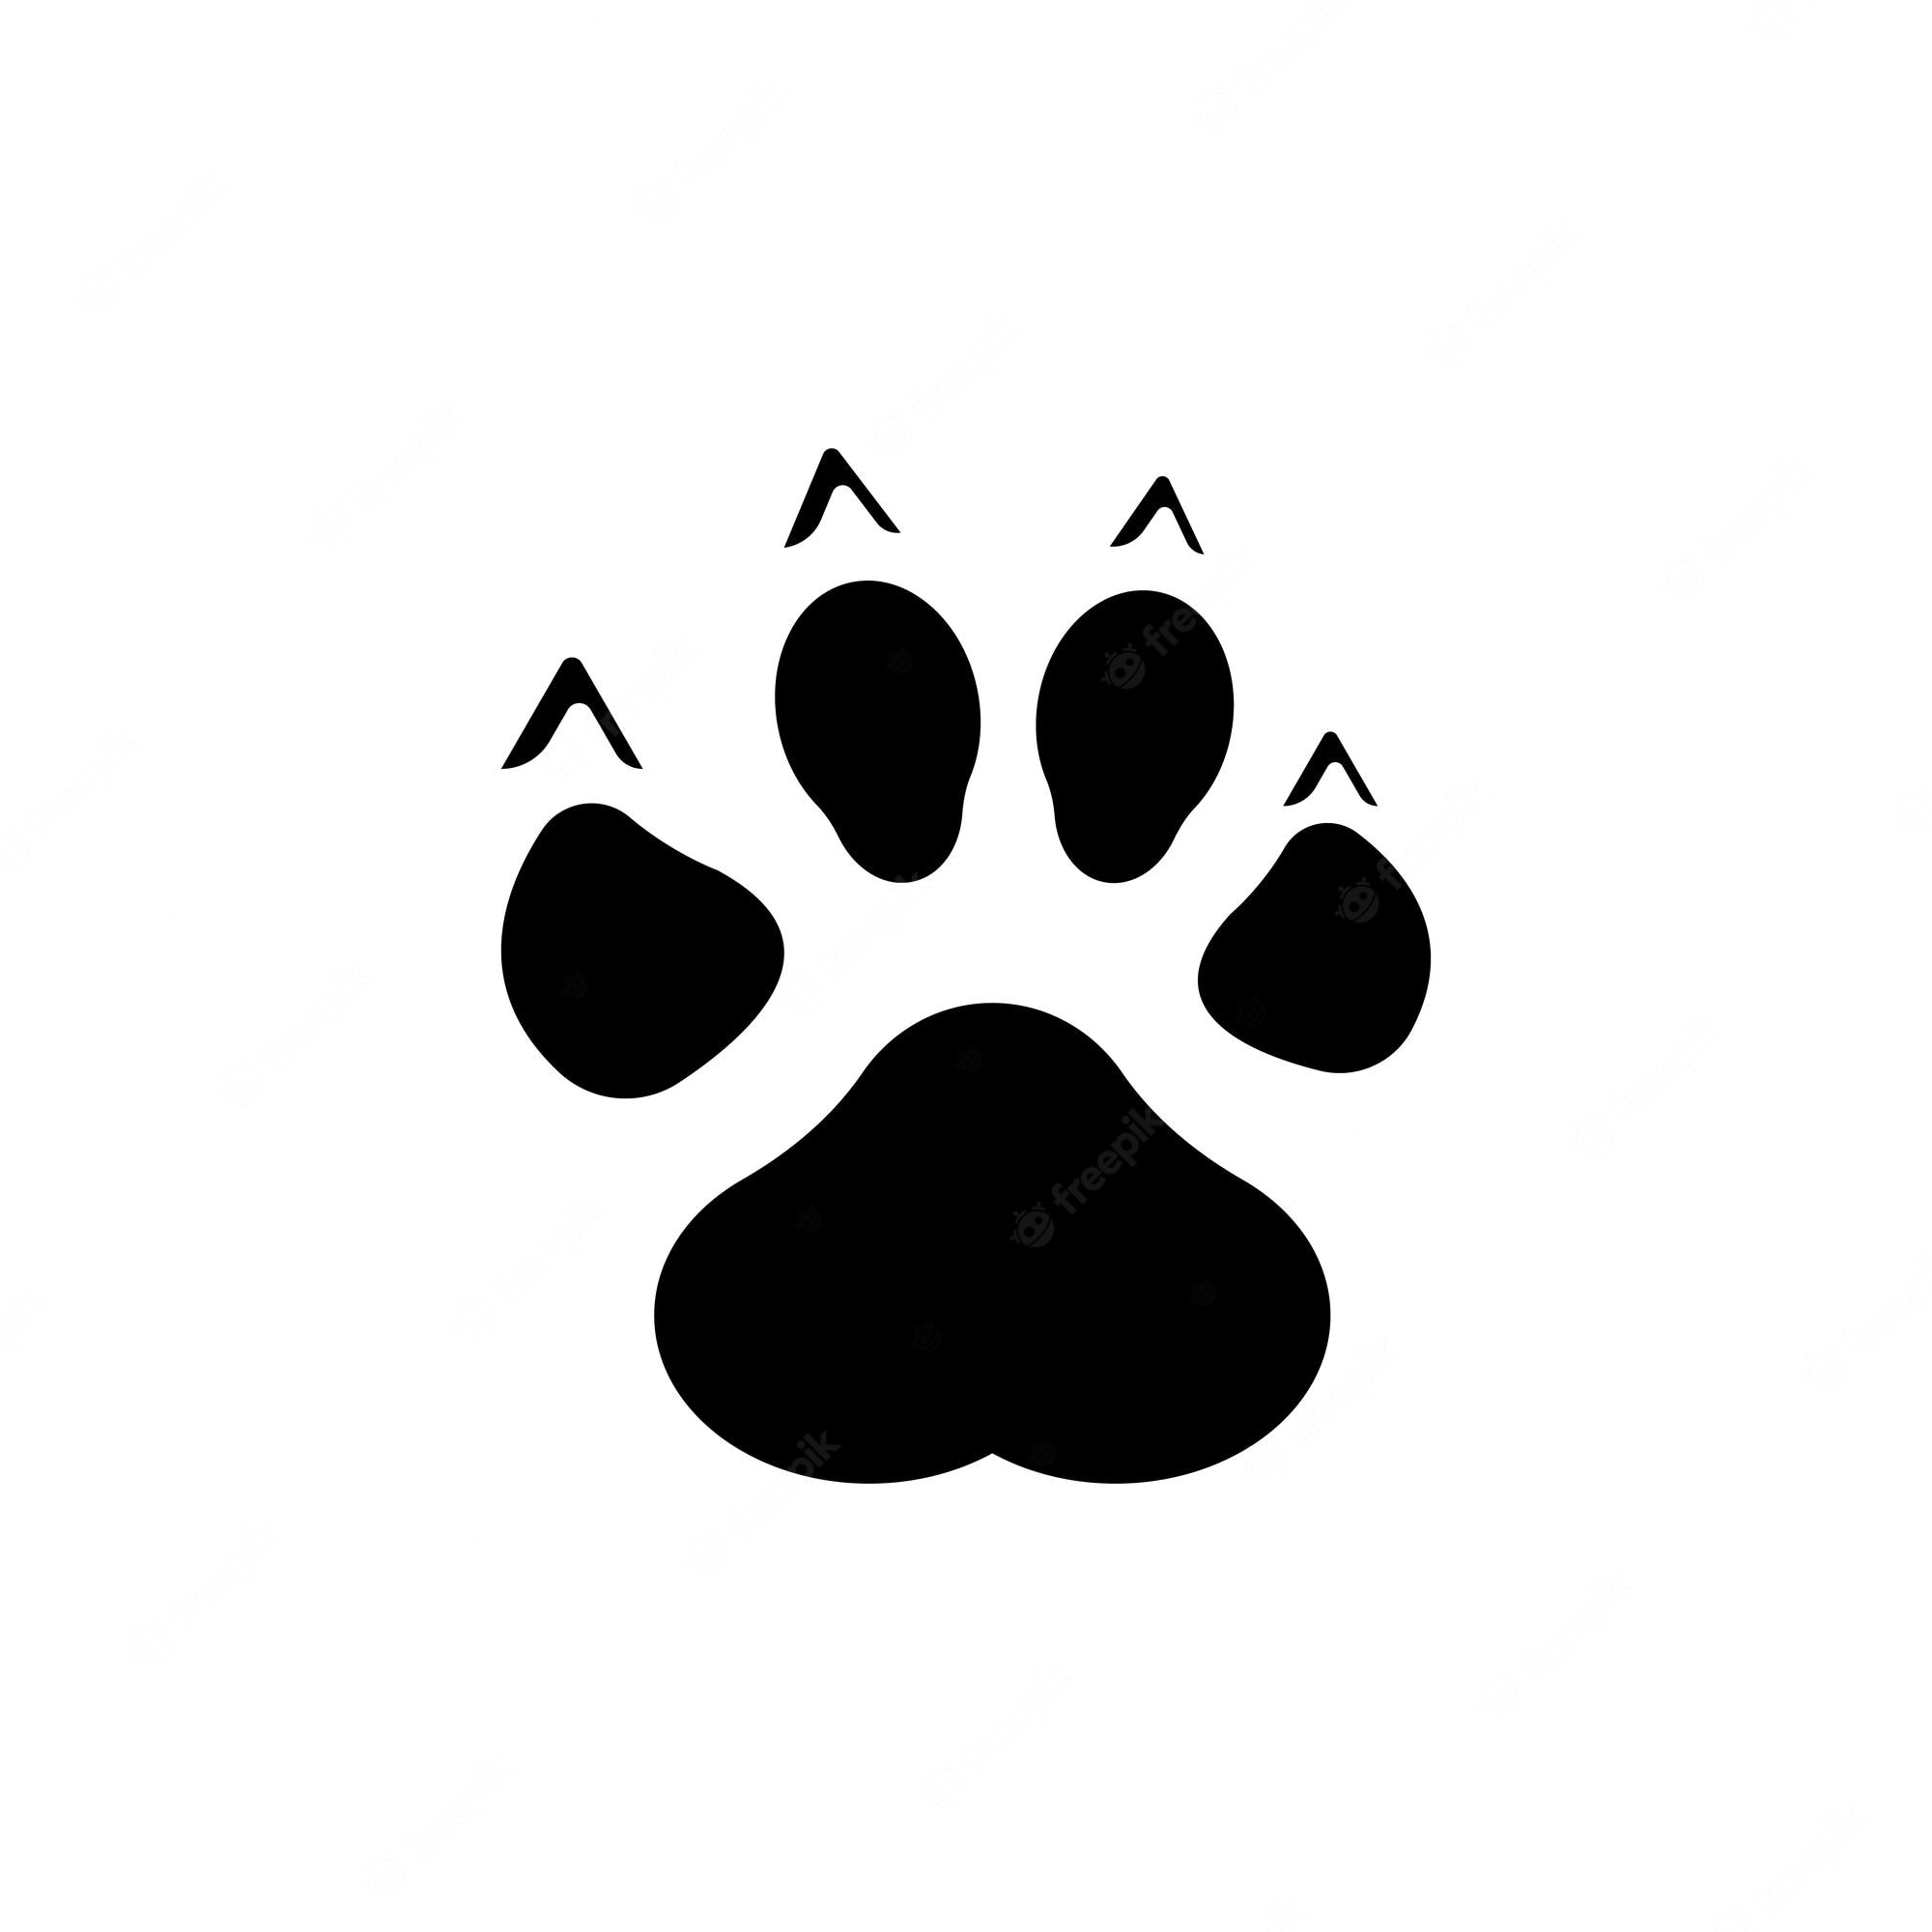 Wolf paw print Image. Free Vectors, & PSD